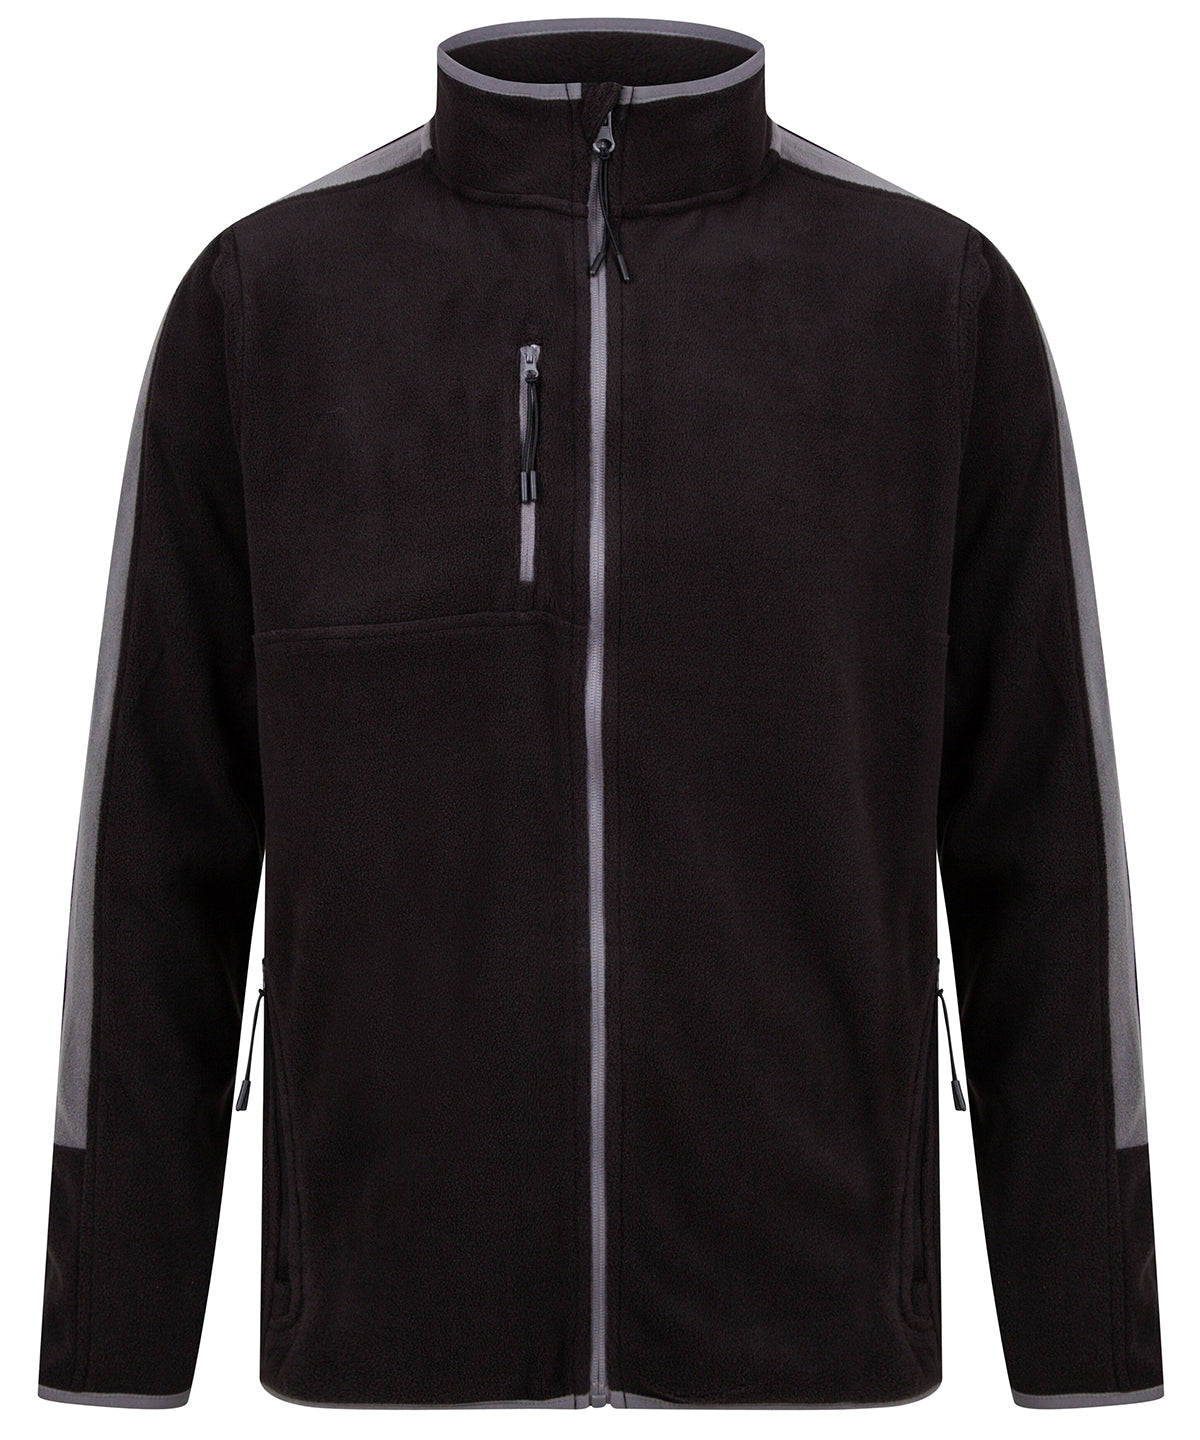 Personalised Jackets - Black Finden & Hales Unisex microfleece jacket